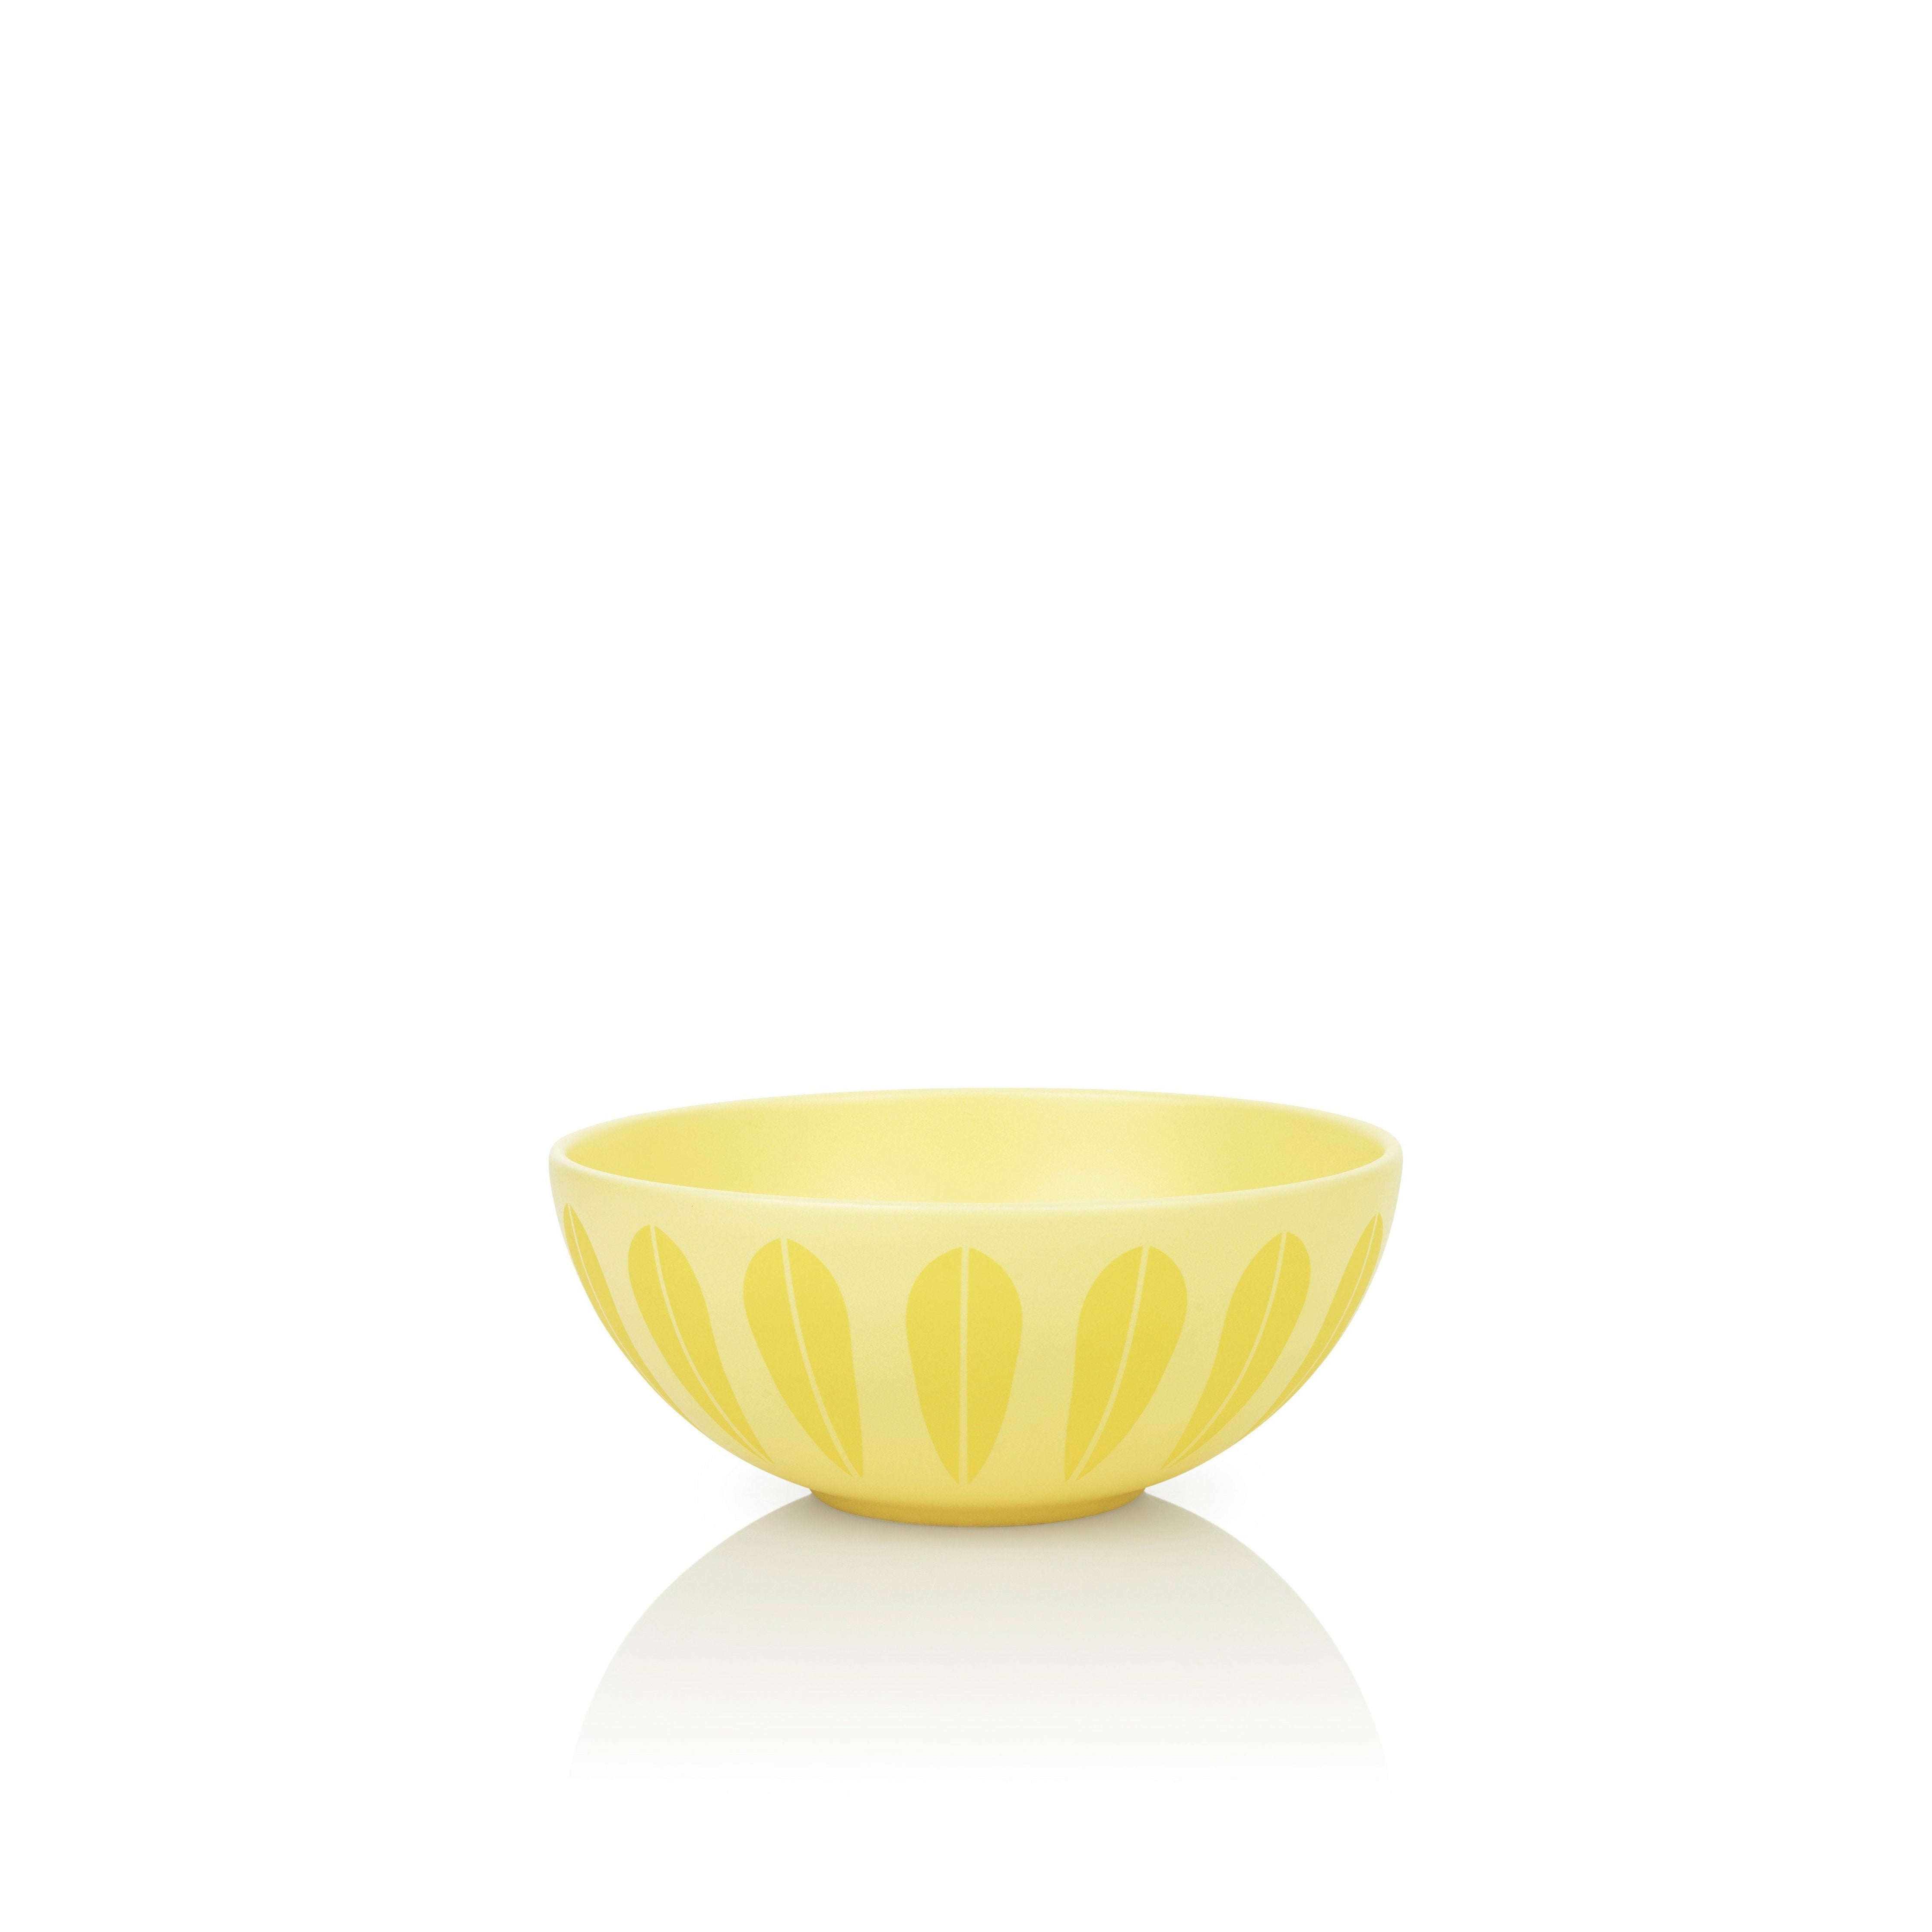 Lucie Kaas Arne Clausen Lotus Bowl gelb, Ø24 cm